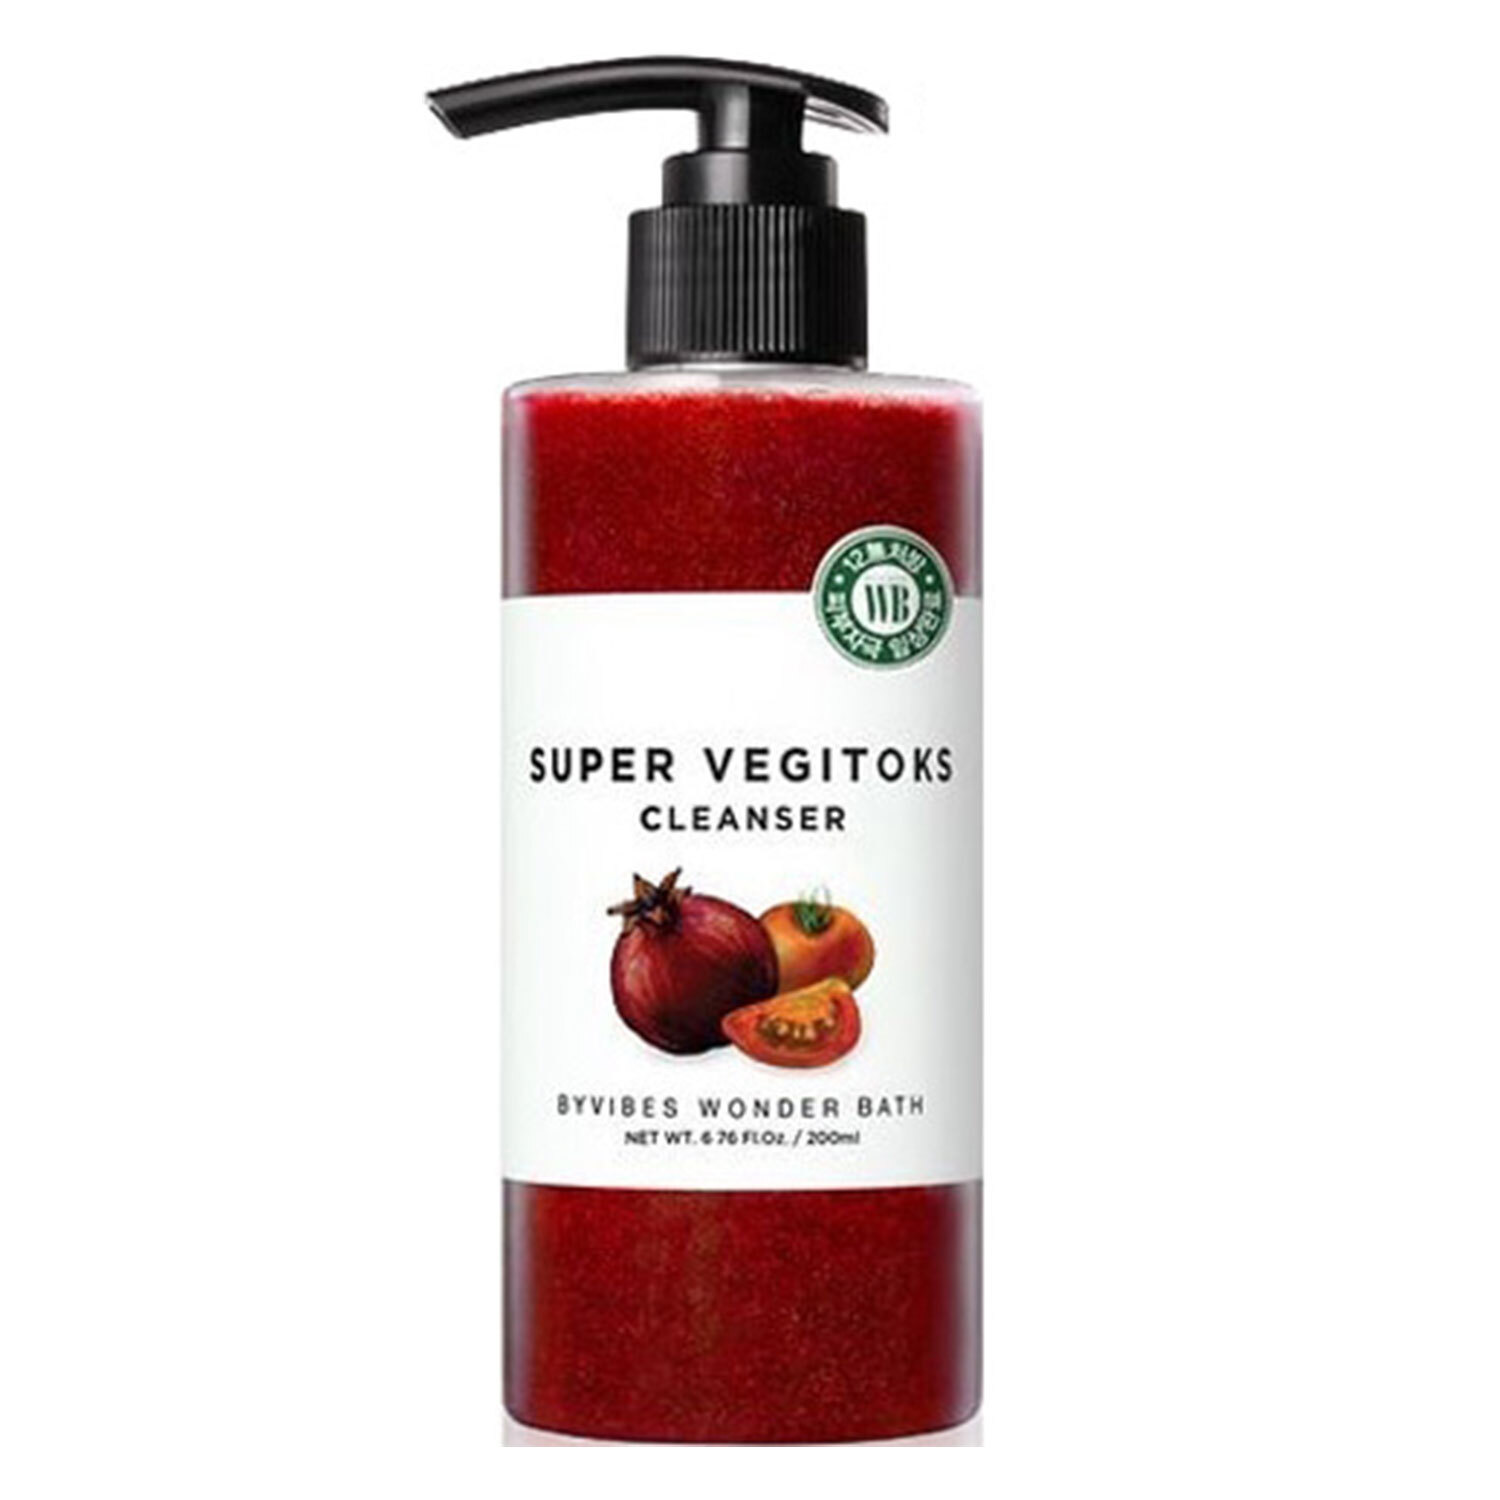 Sữa Rửa Mặt Rau Củ Thải Độc Byvibes Wonder Bath Super Vegitoks Cleanser Red (300ml)